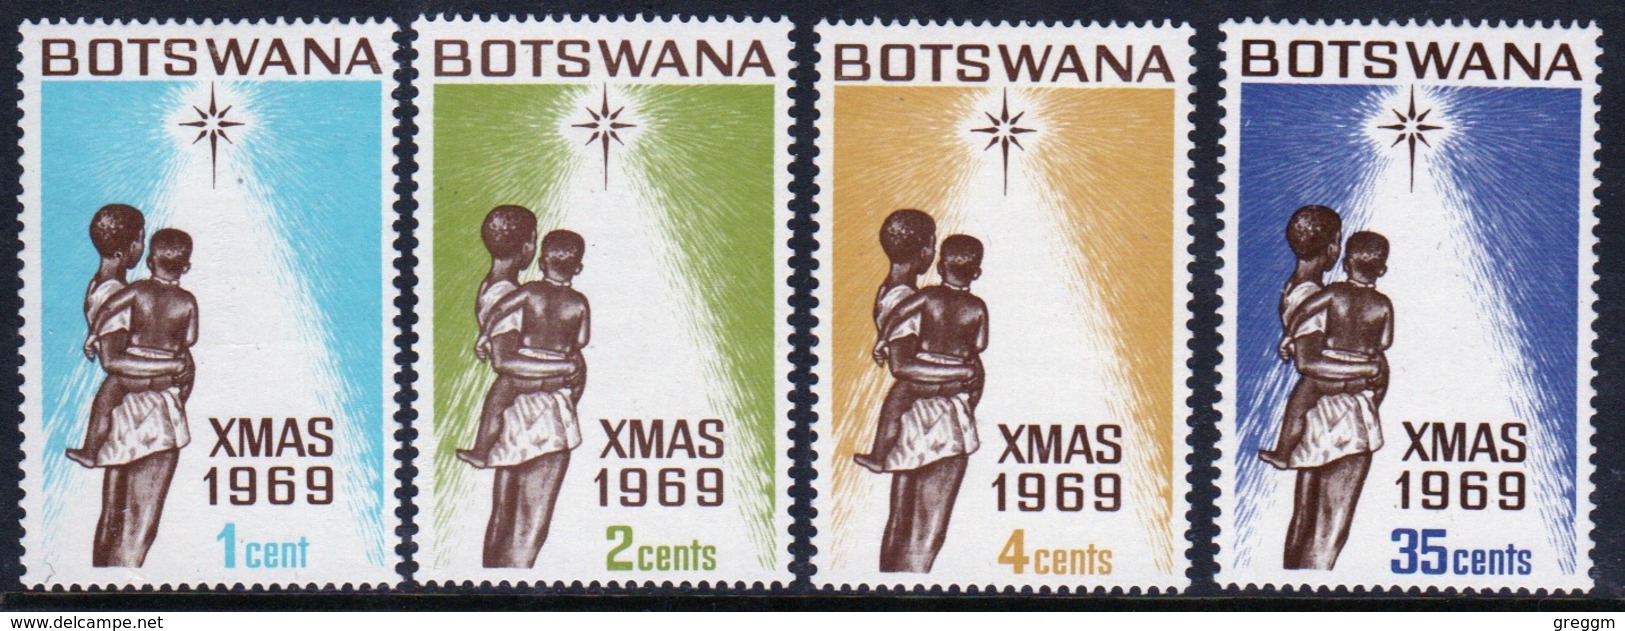 Botswana Set Of Stamps From 1969 To Celebrate Christmas. - Botswana (1966-...)